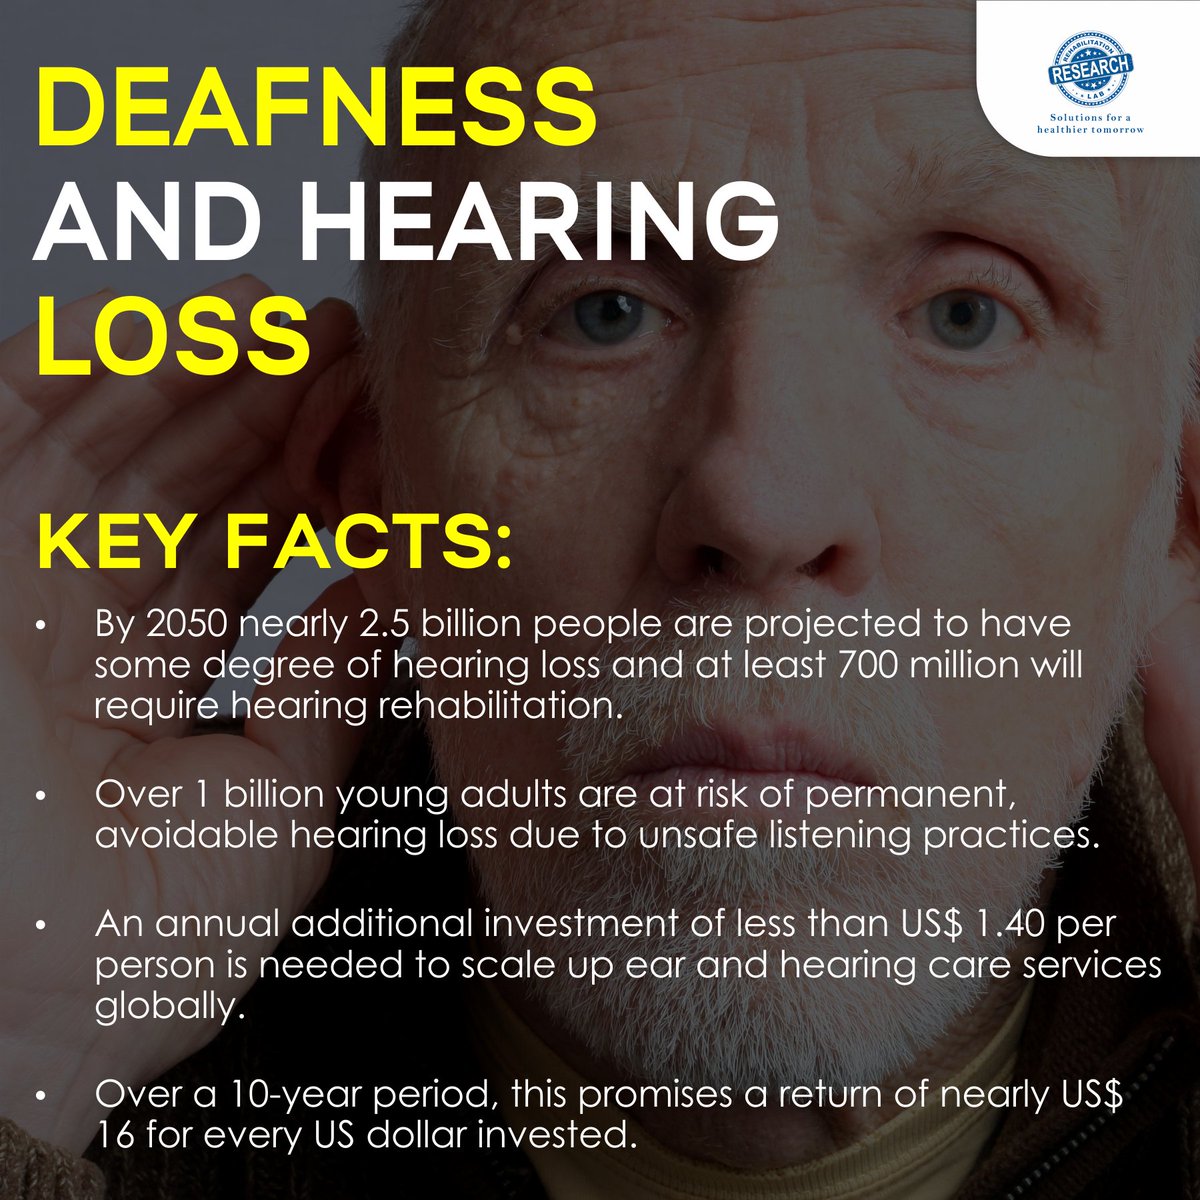 DEAFNESS AND HEARING LOSS
-KEY FACTS:

#HearingLossAwareness
#DeafnessMatters
#GlobalHearingCare
#HearingHealth
#2Point5BillionStrong
#HearingLossPrevention
#SafeListening
#HearingRehabilitation
#EarCare
#InvestInHearingHealth
#ProtectYourHearing
#NoisyWorld
#1BillionAtRisk